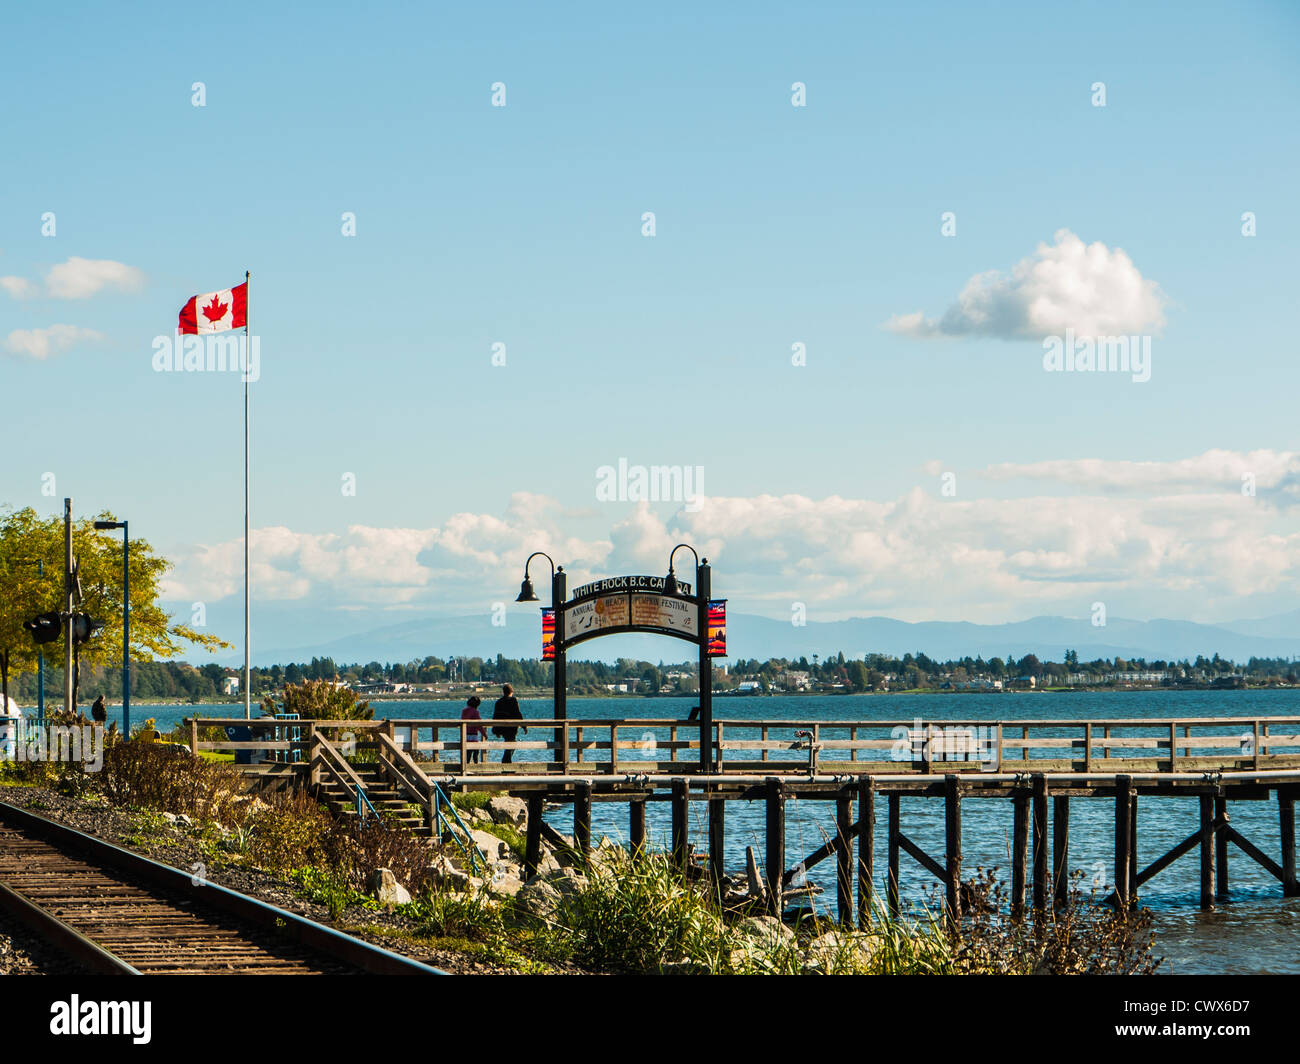 Pier and Railroad at White Rock British Columbia, Canada Stock Photo